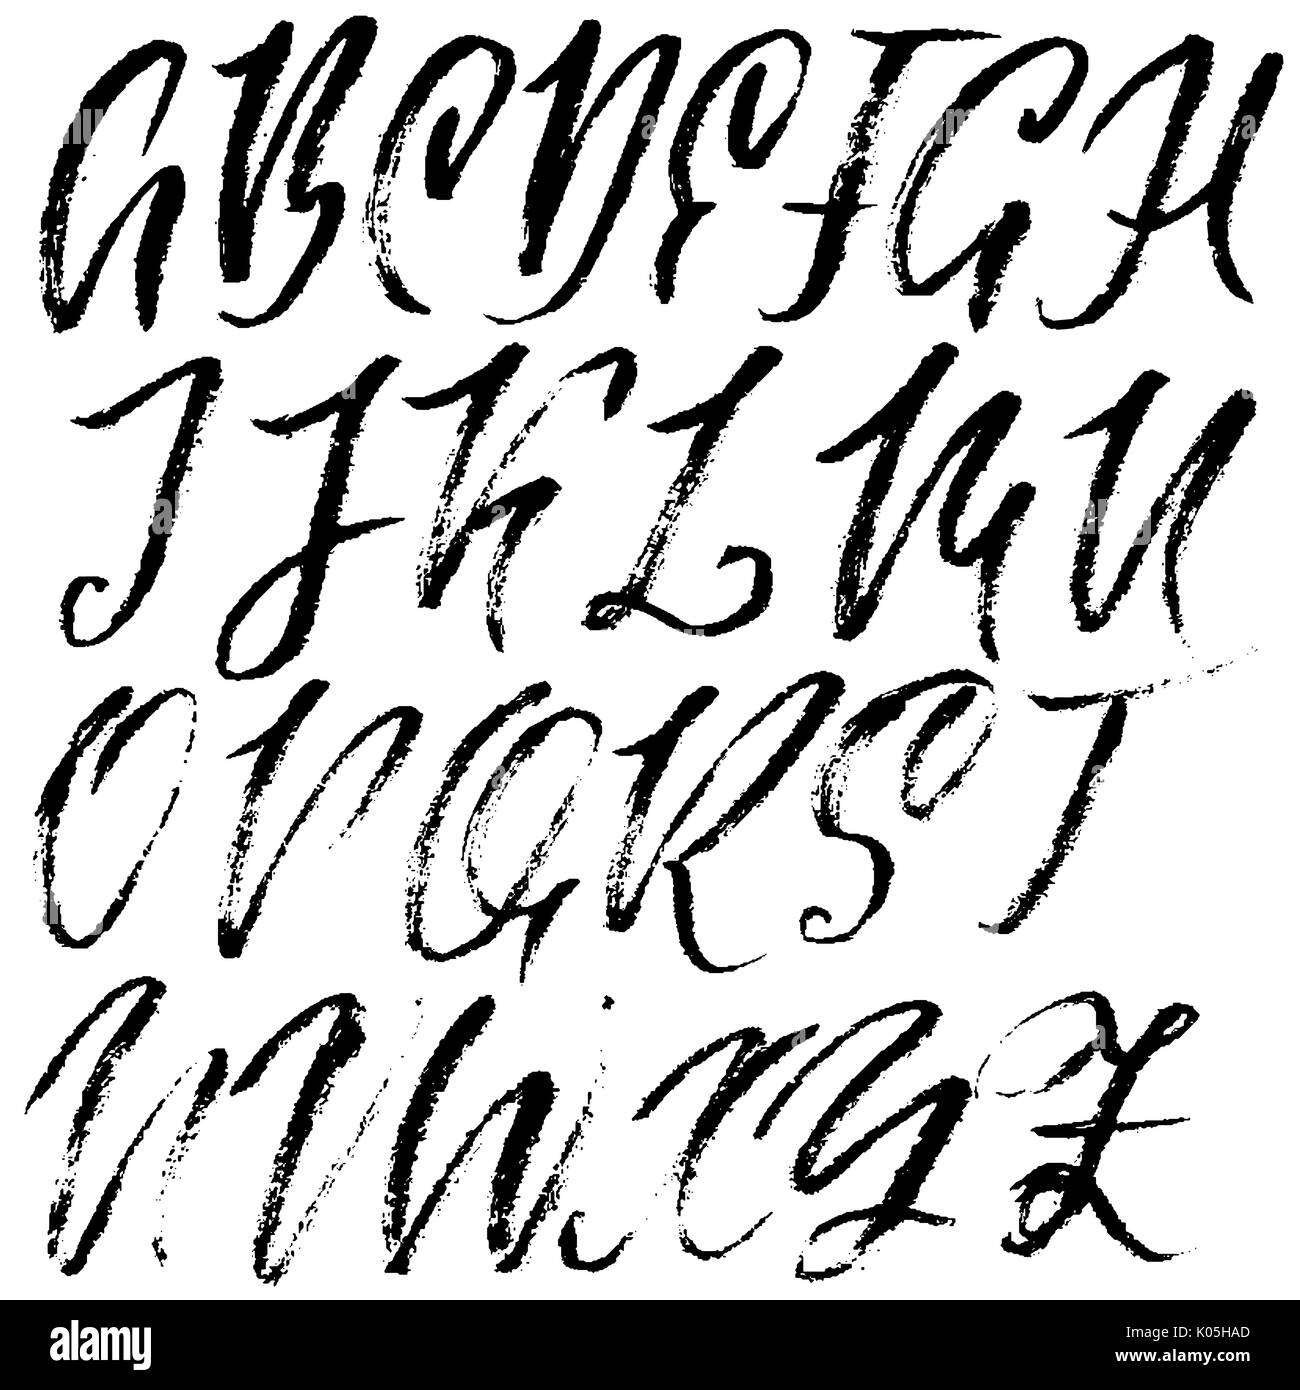 Alphabet in modern calligraphy style Stock Photo - Alamy